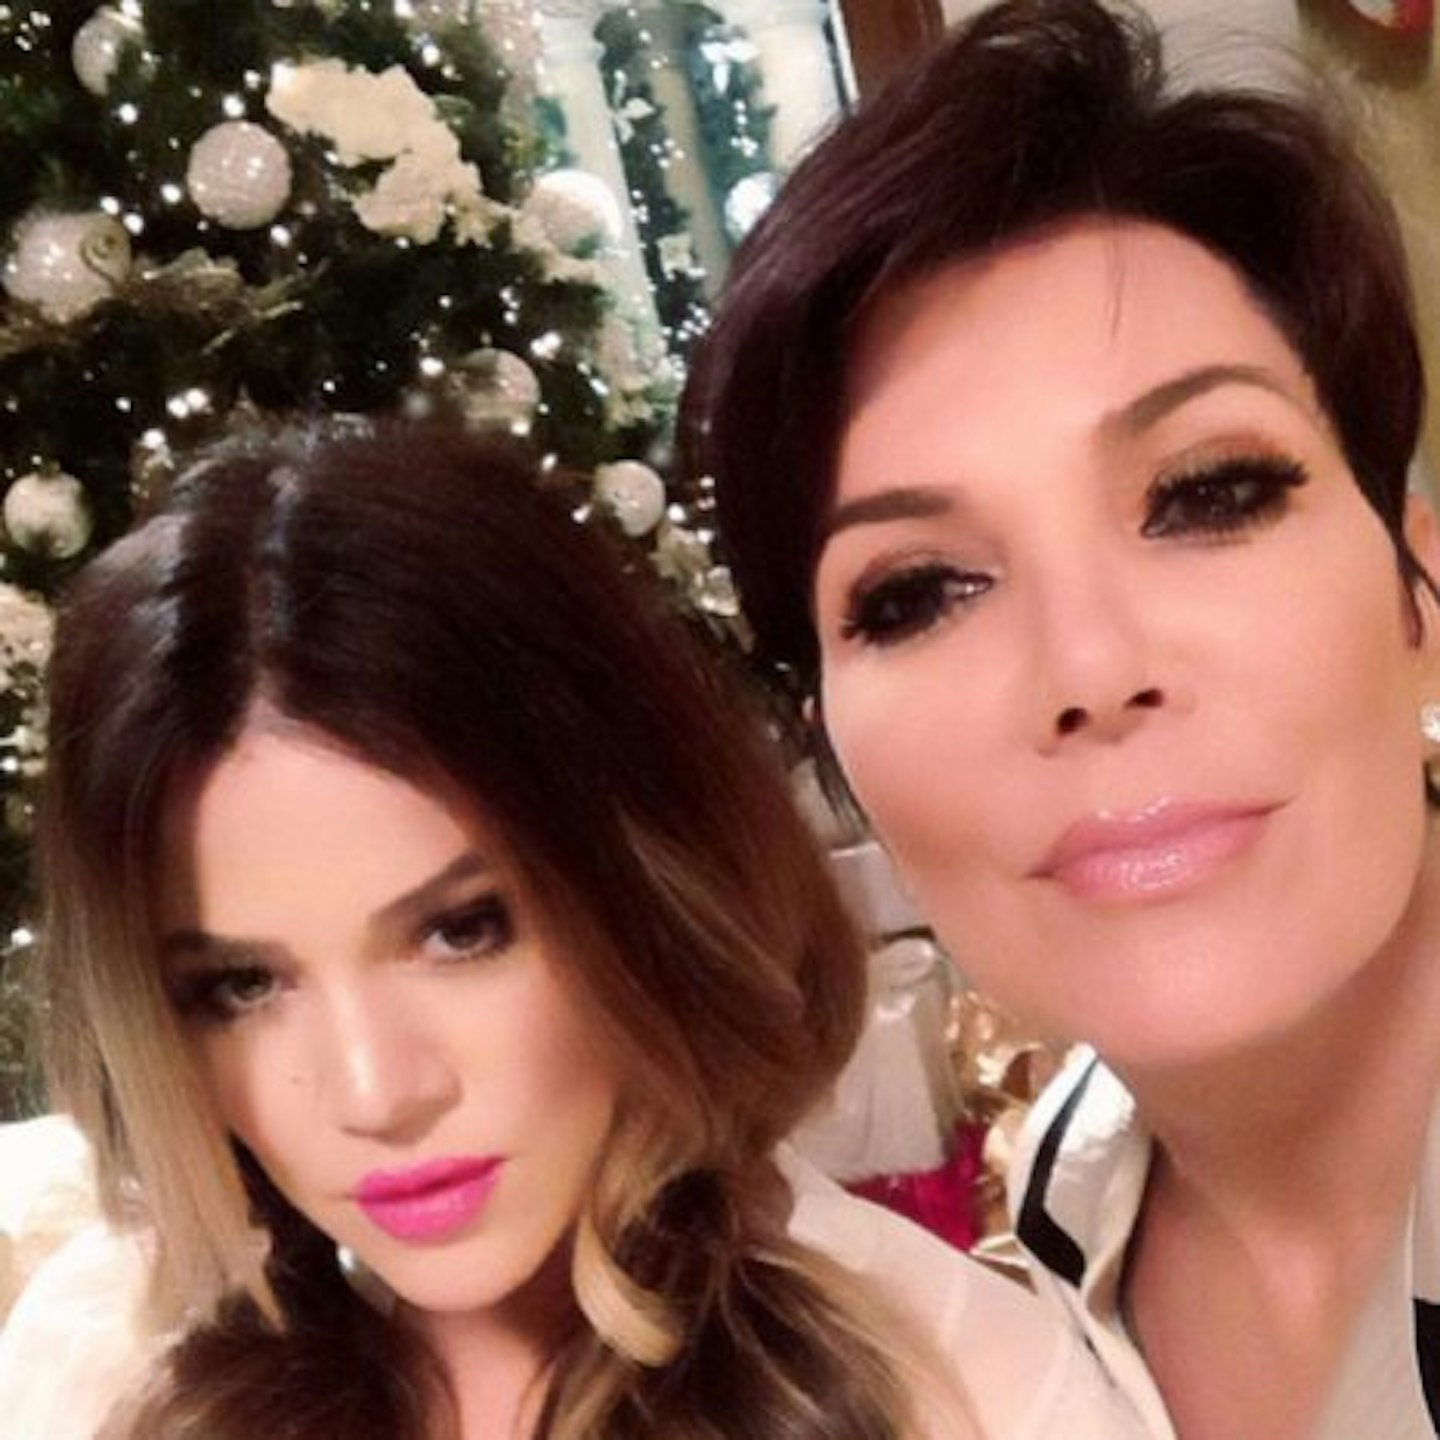 Khloe Kardashian favours the looks of her mother, Kris Jenner